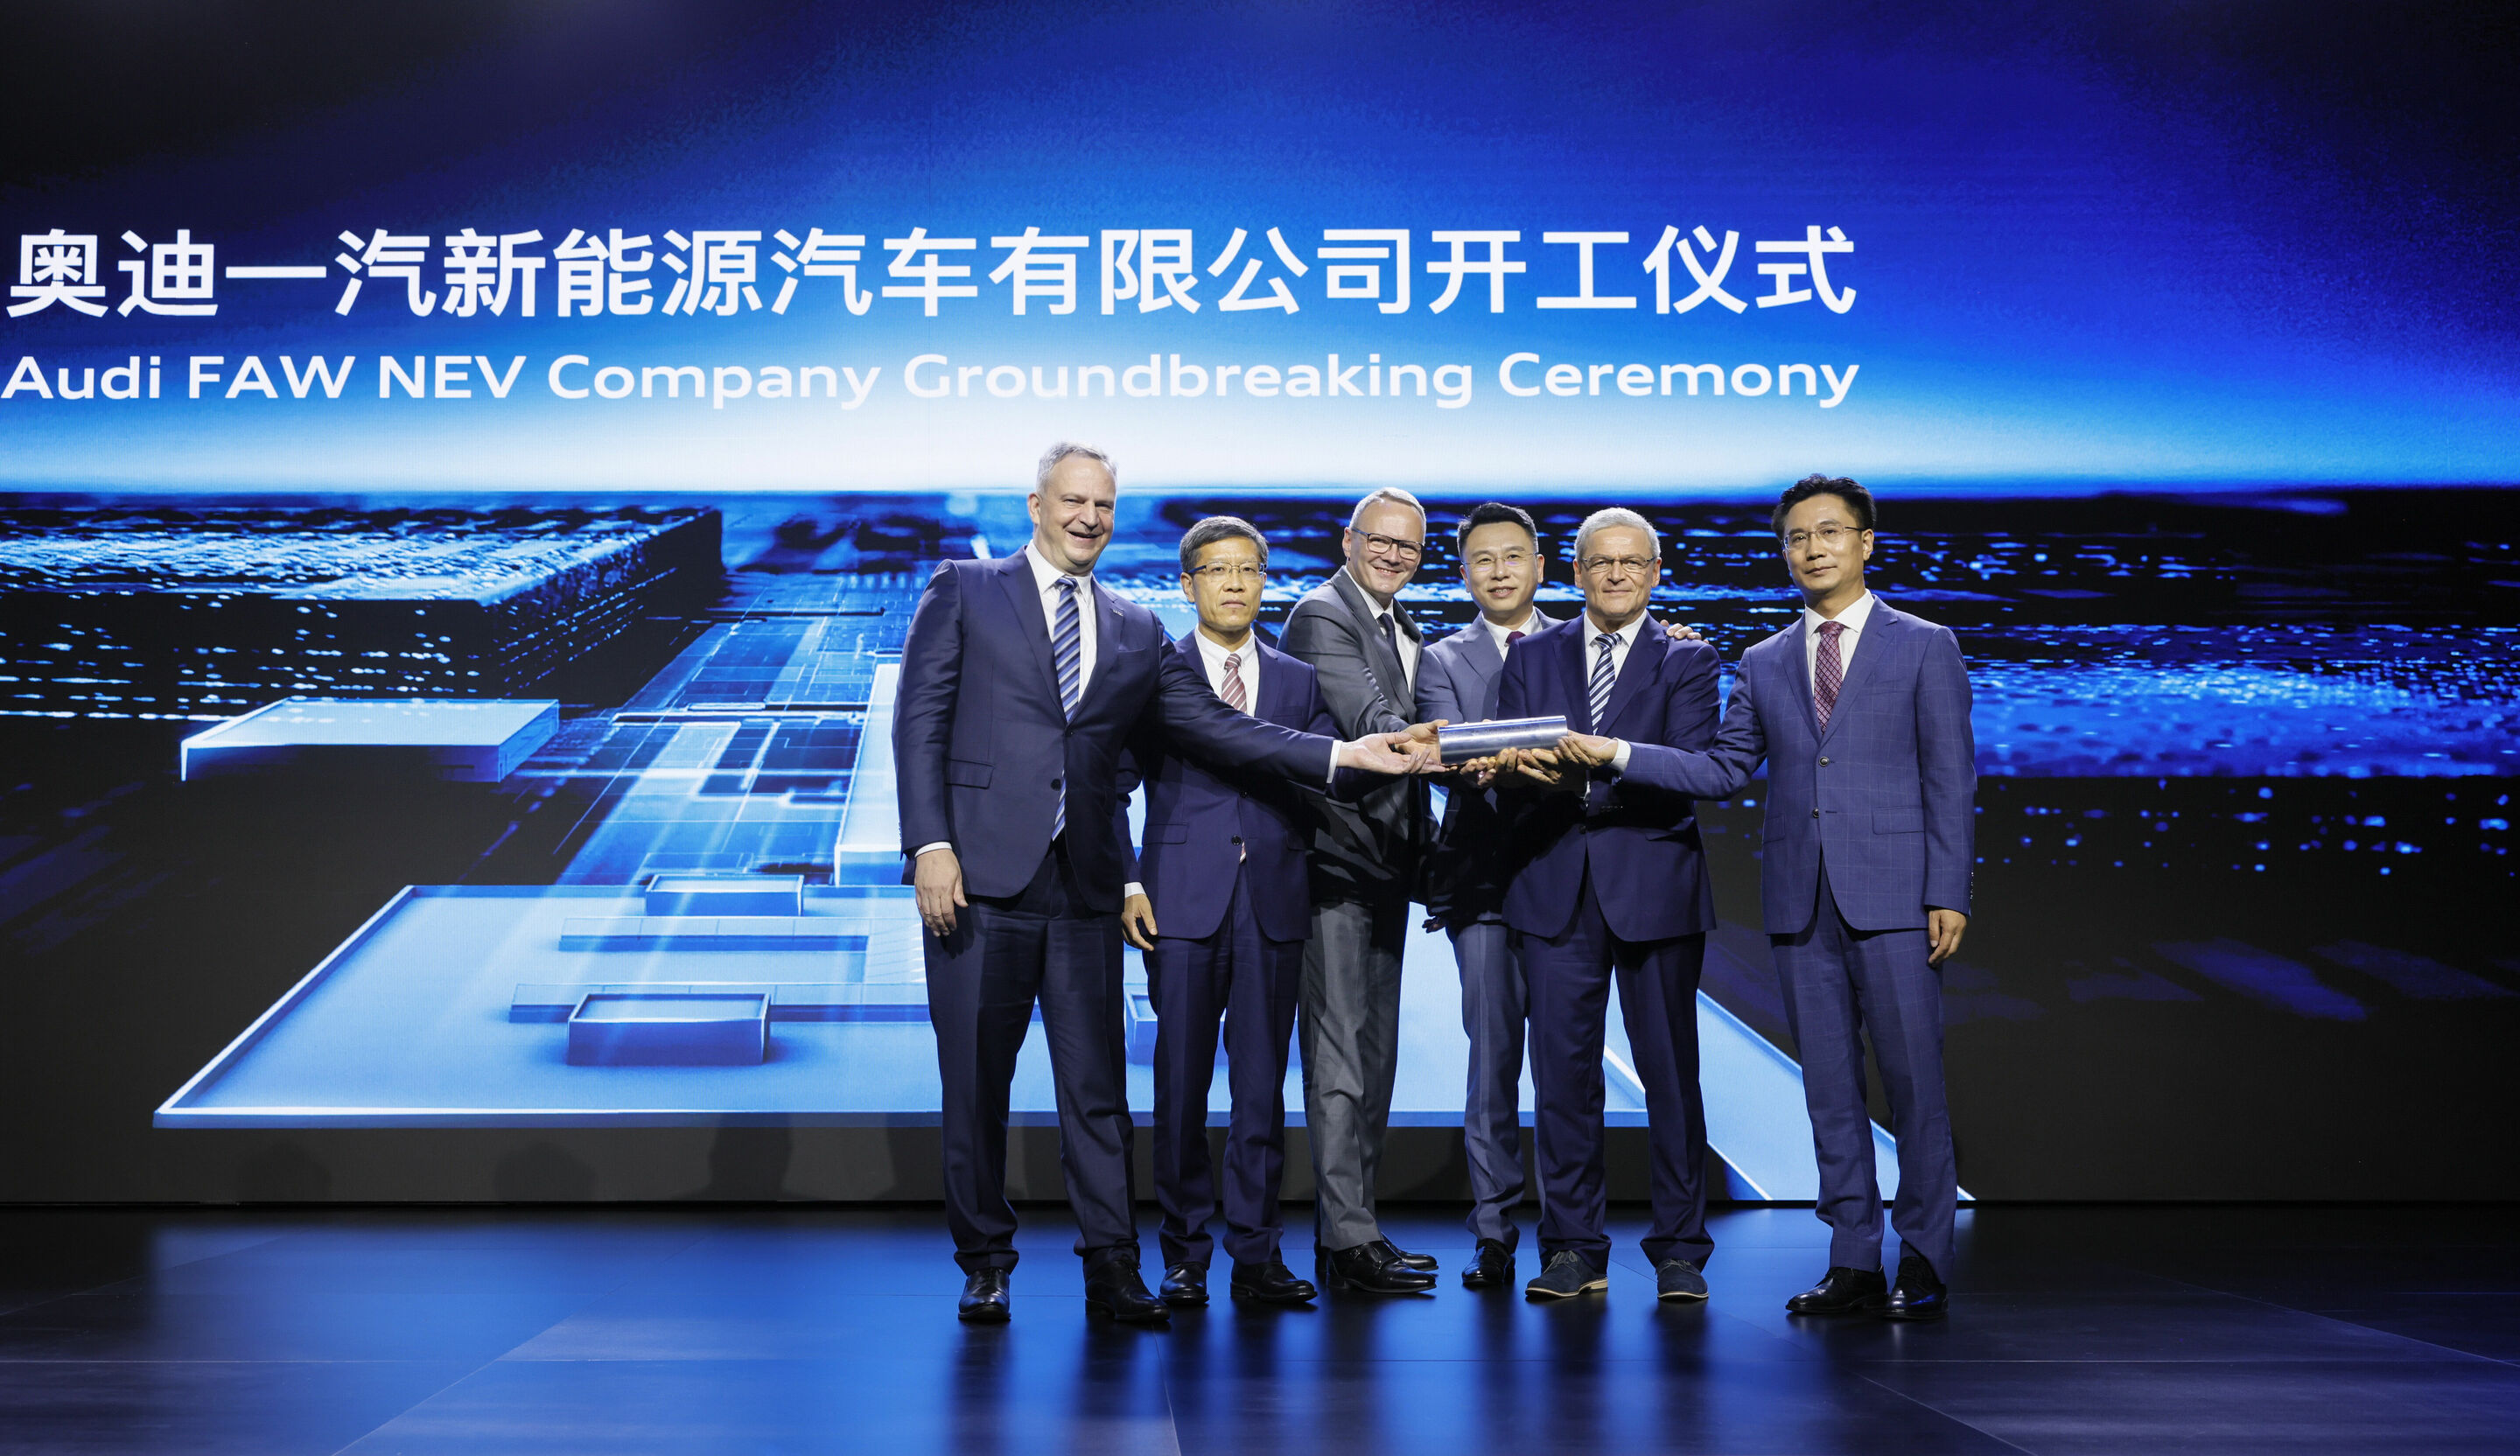 Grundsteinlegung in Changchun: Audi FAW NEV Company baut smarte Fabrik für E-Modelle